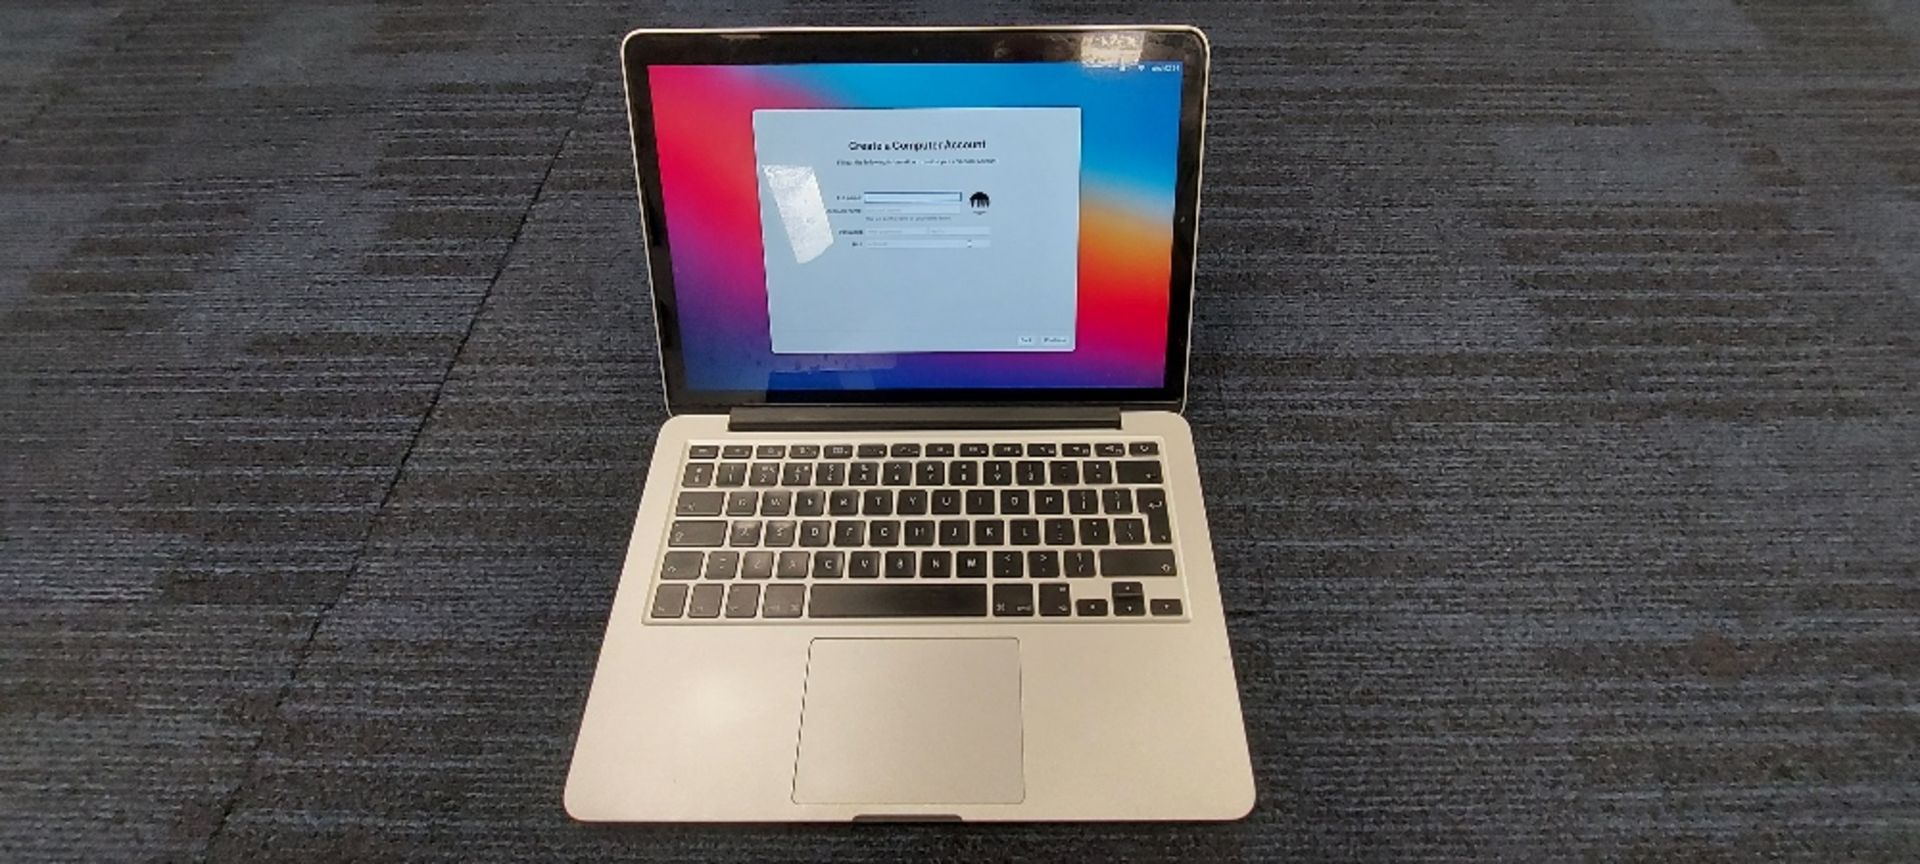 Apple MacBook Pro 13-Inch "Core i5" 2.6 Retina Mid-2014 - Image 2 of 3